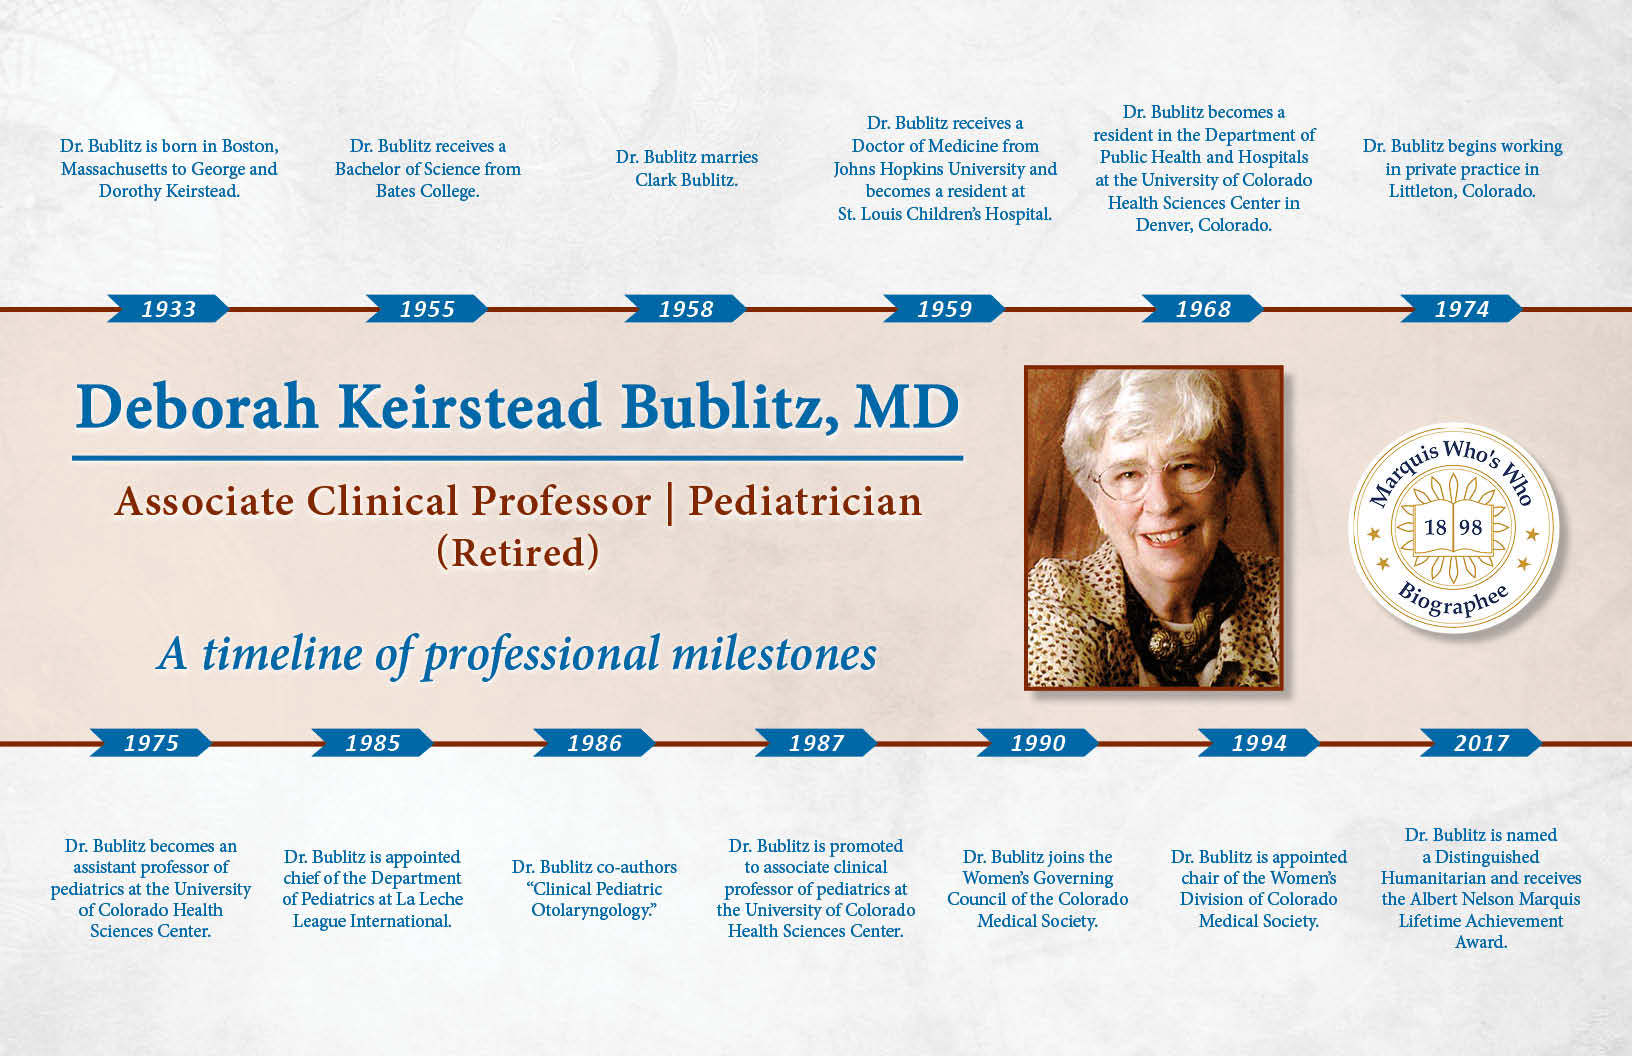 Deborah Keirstead Bublitz Professional Milestones